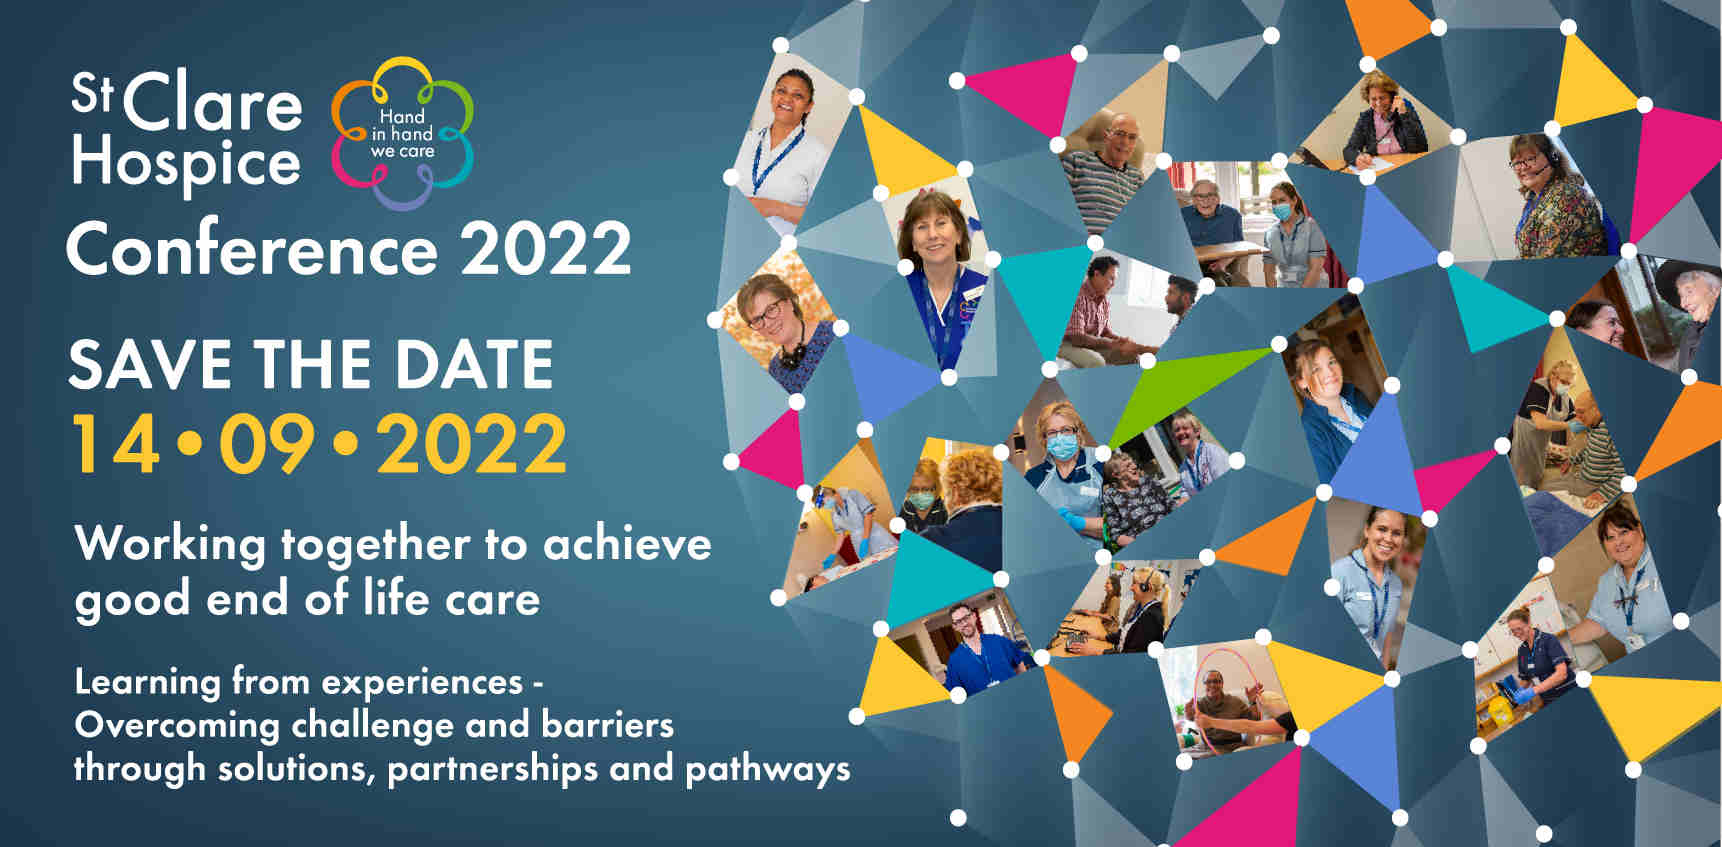 St Clare Hospice Palliative Care Conference 2022